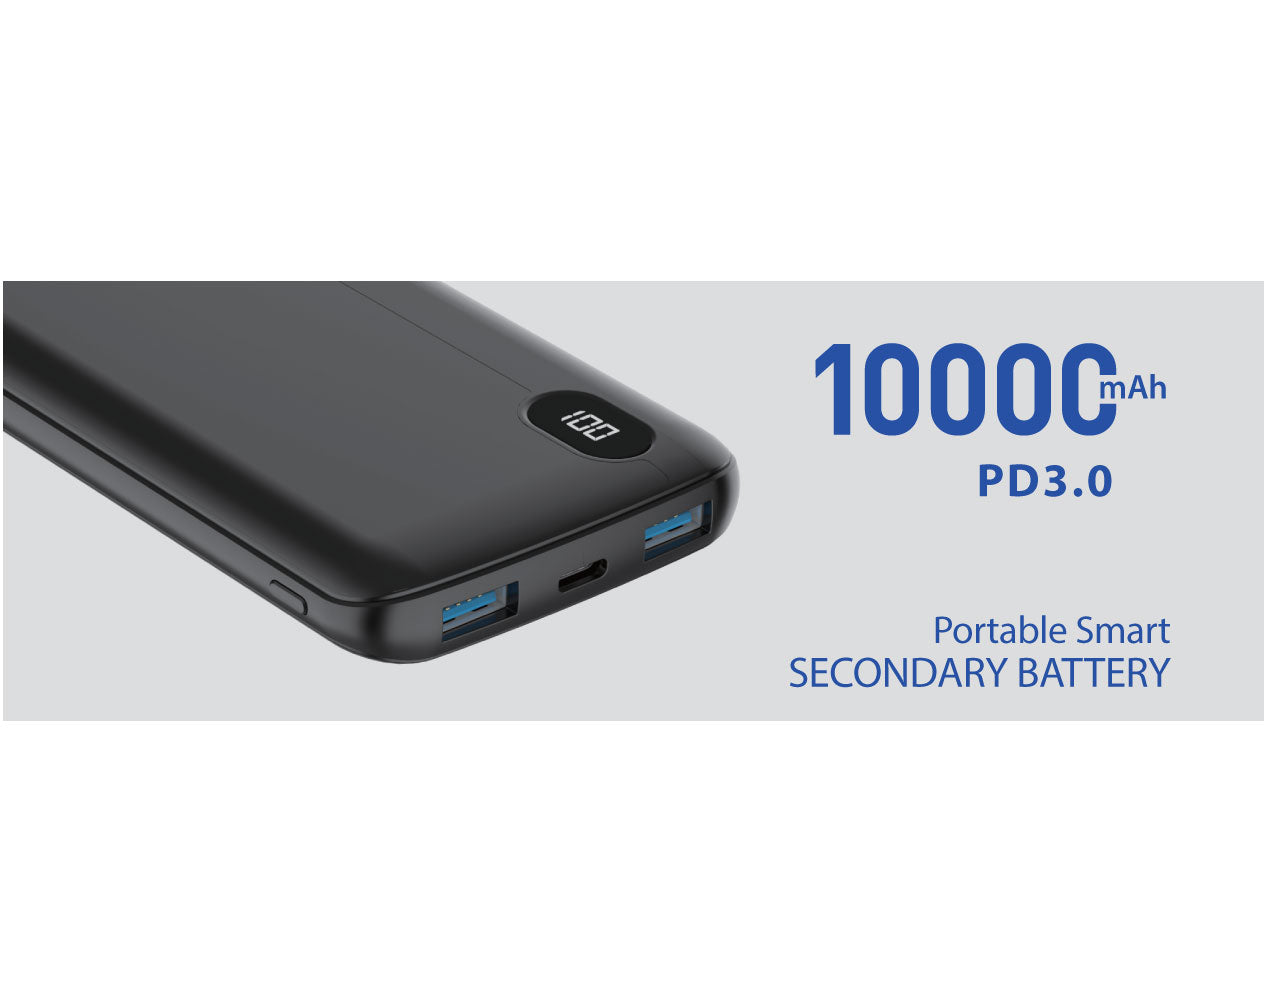  10000mAh Power Bank  LED Display Backup Battery  Portable Charger  Slim  2-Port USB   - BFM11 1905-2